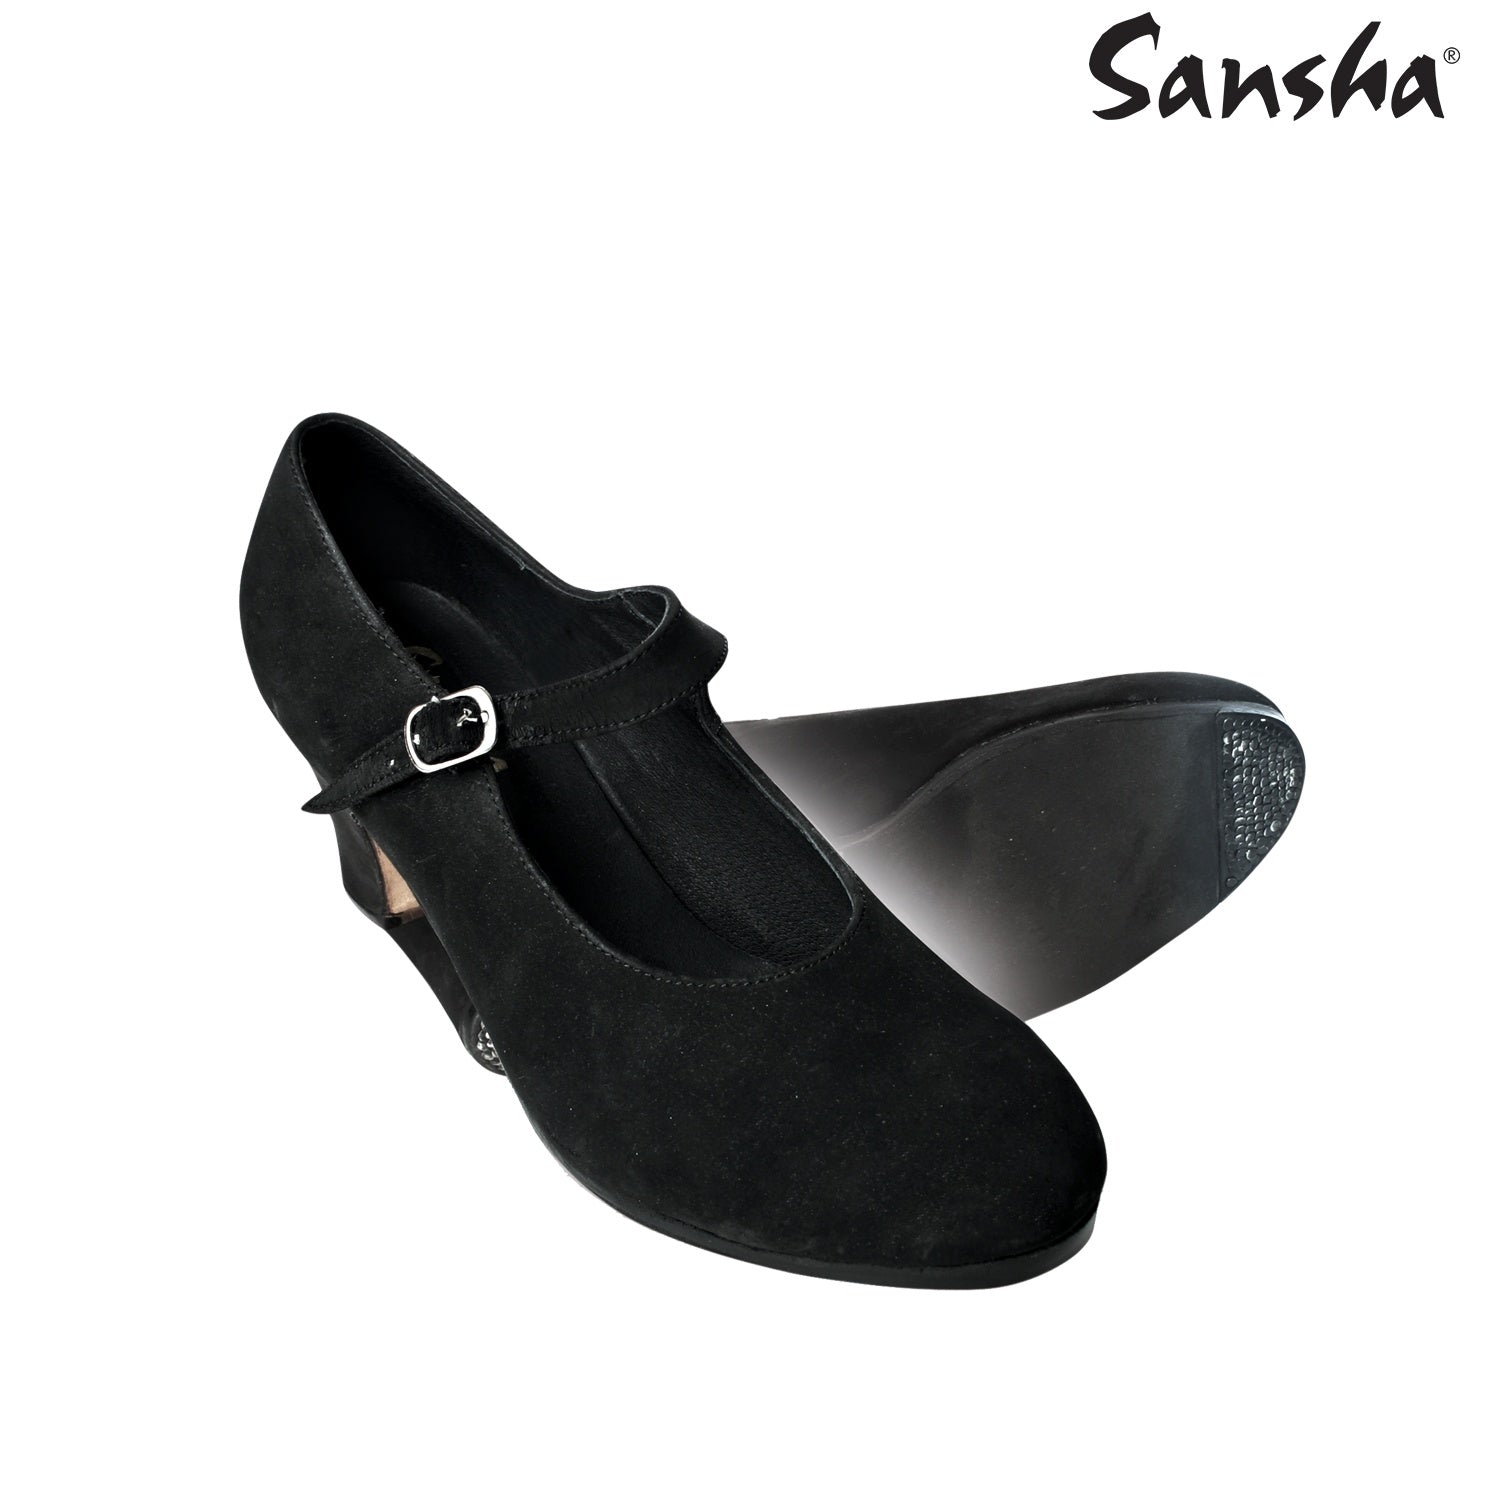 Sansha Flamenco Shoes Suede Adults 